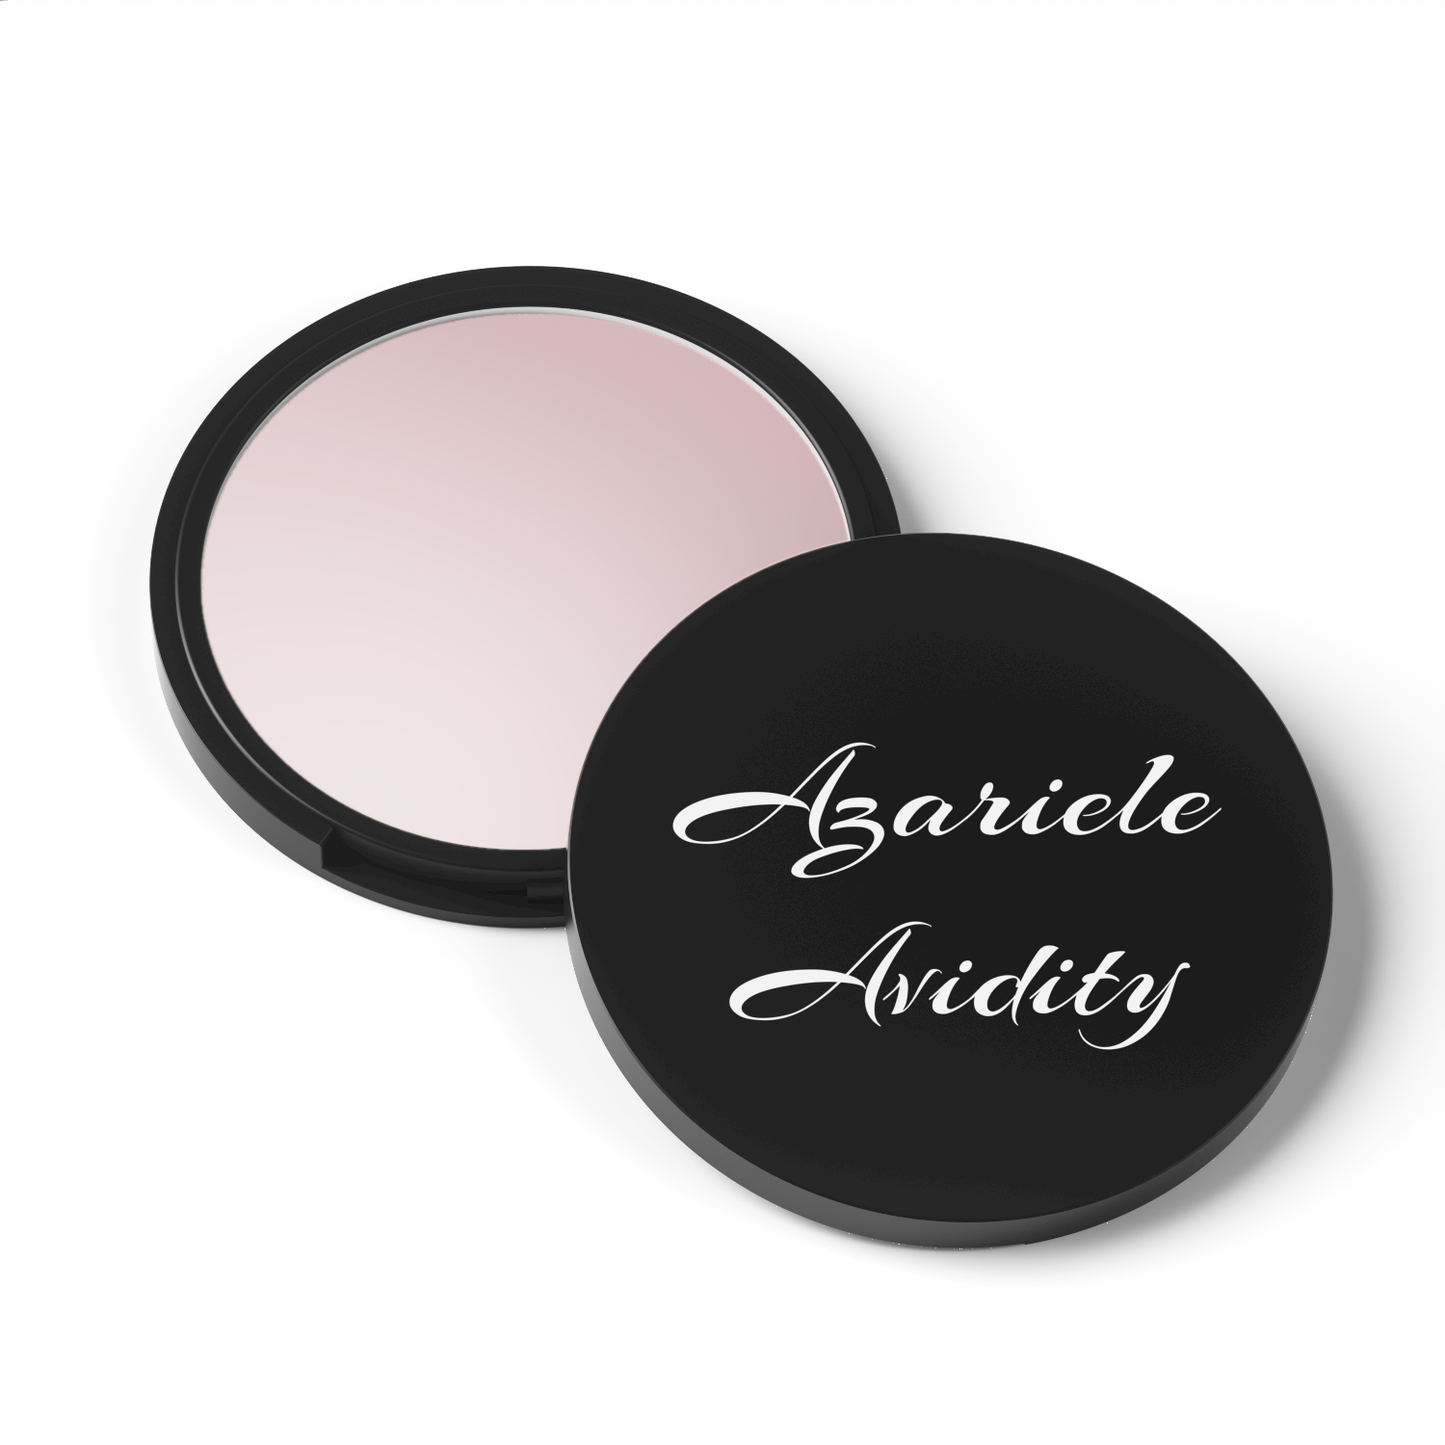 azariele-apparel beauty product